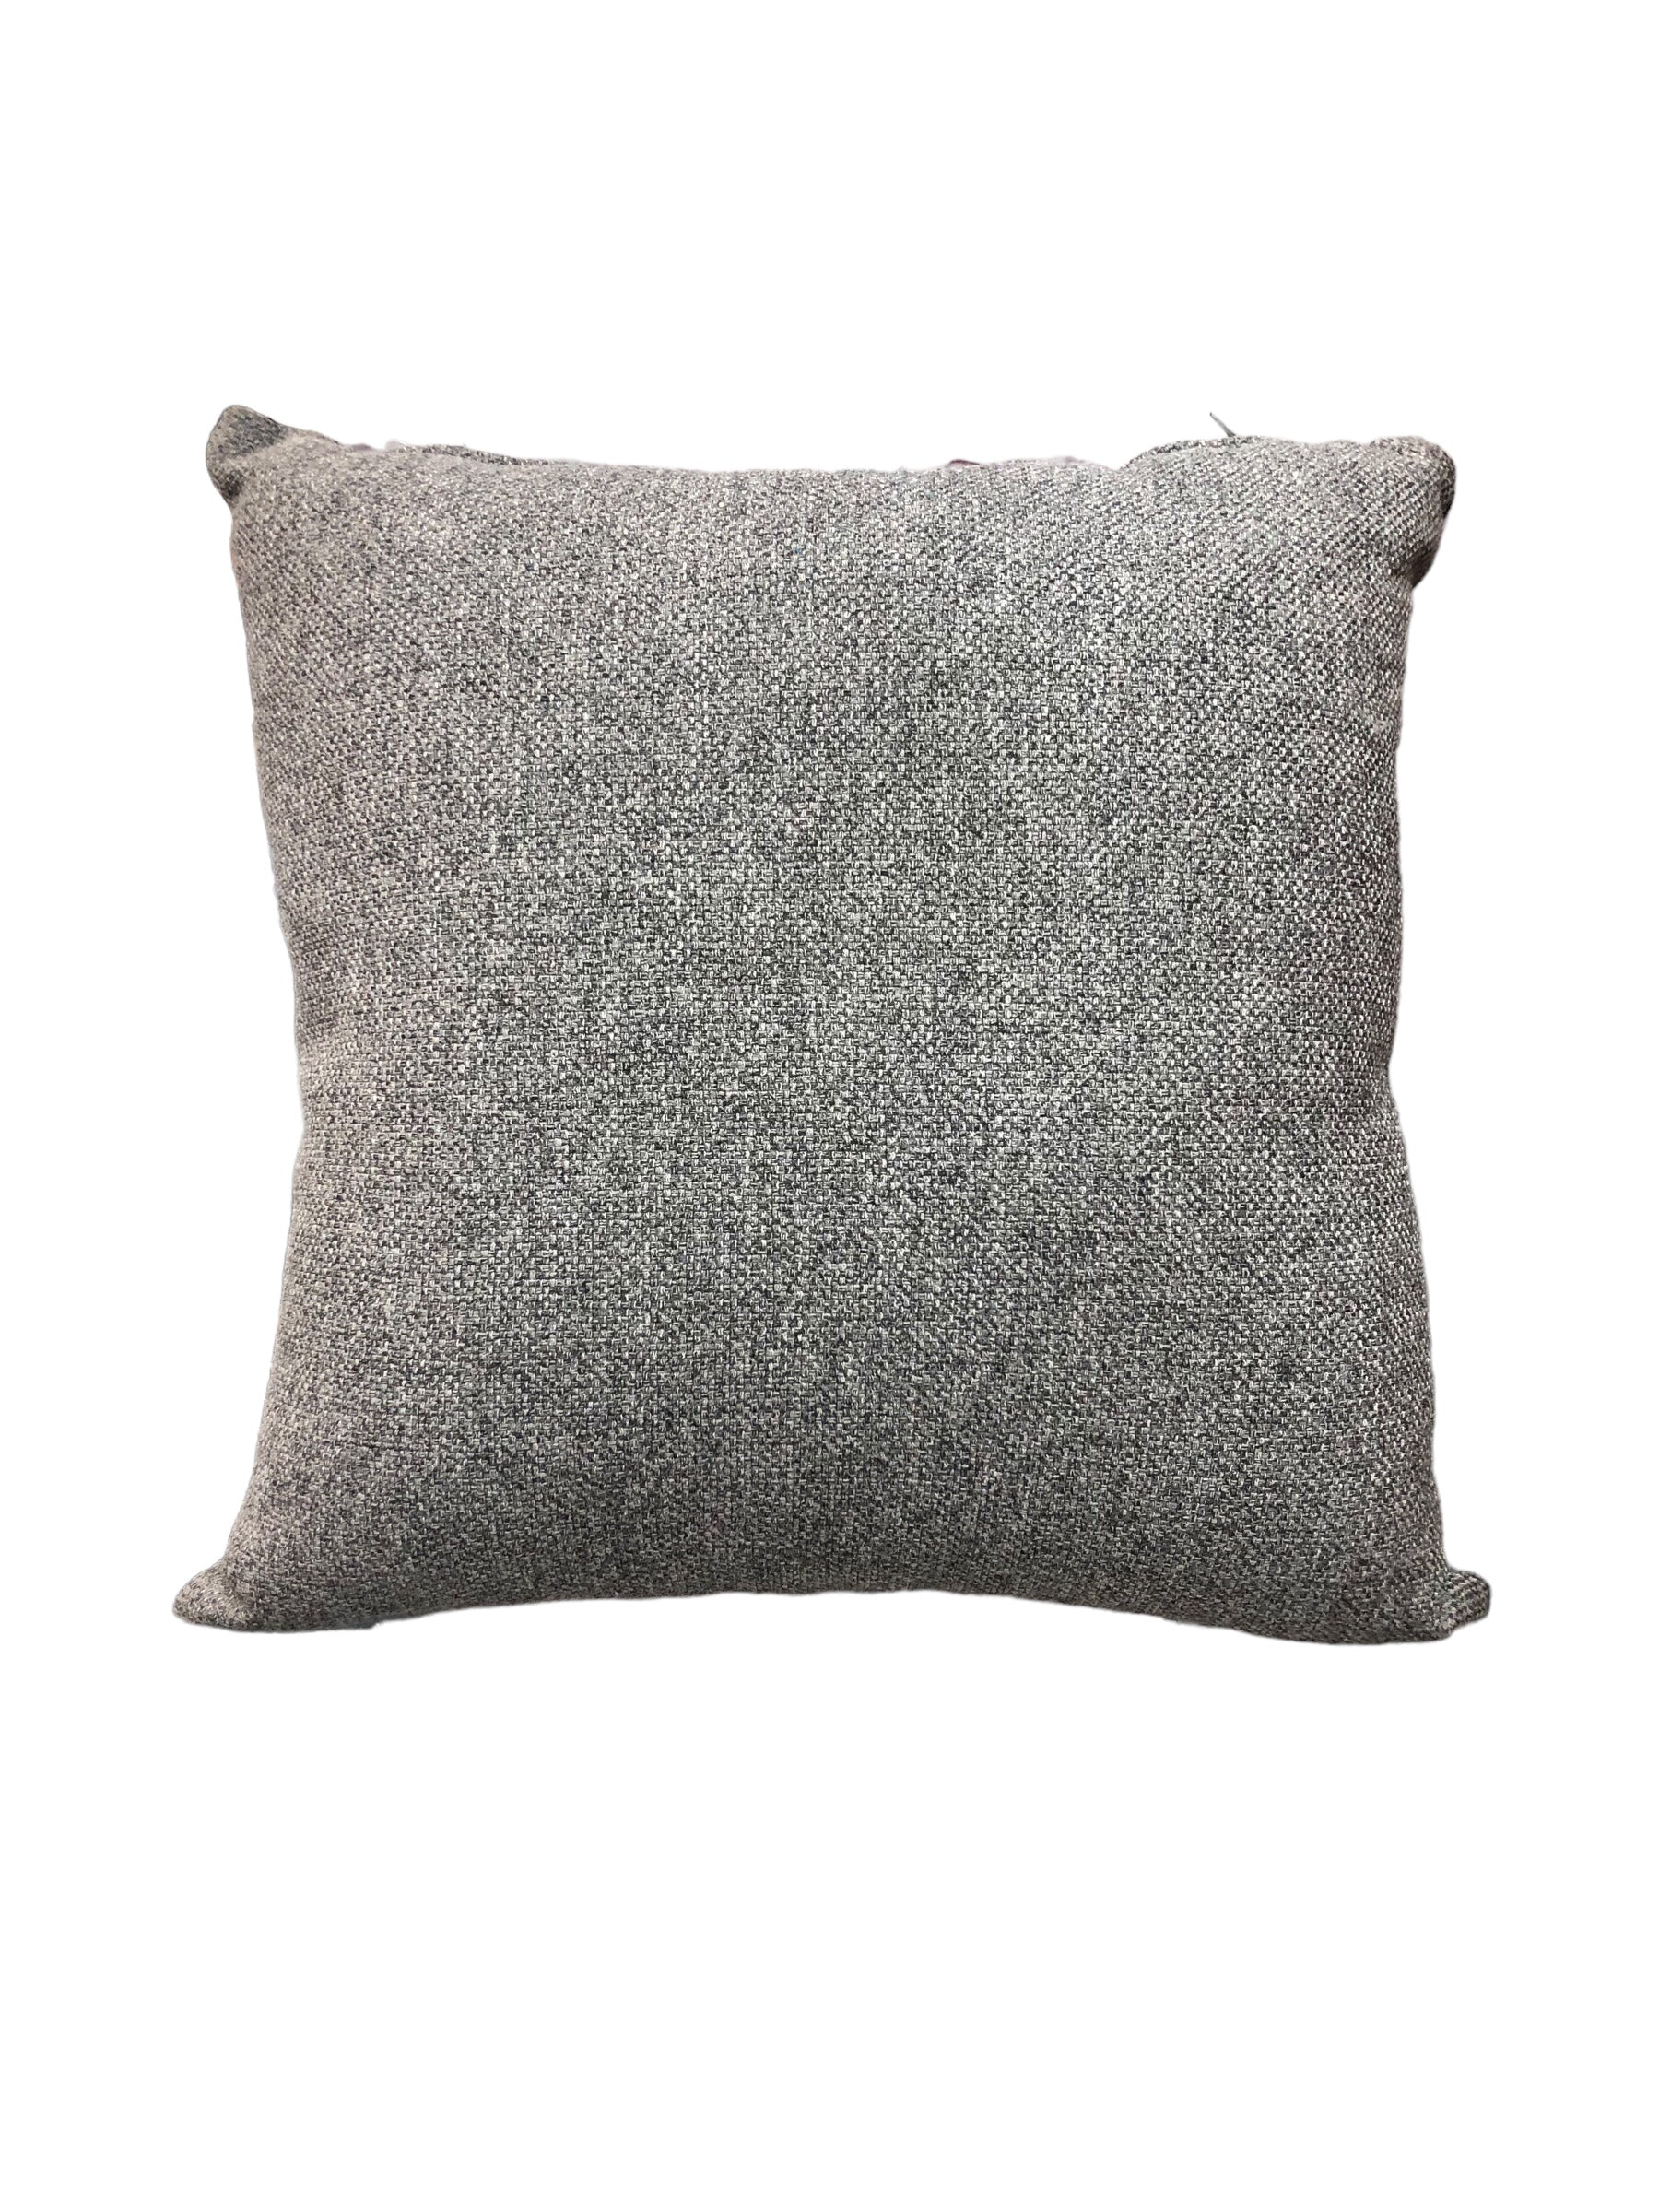 Grey/Black Pillow